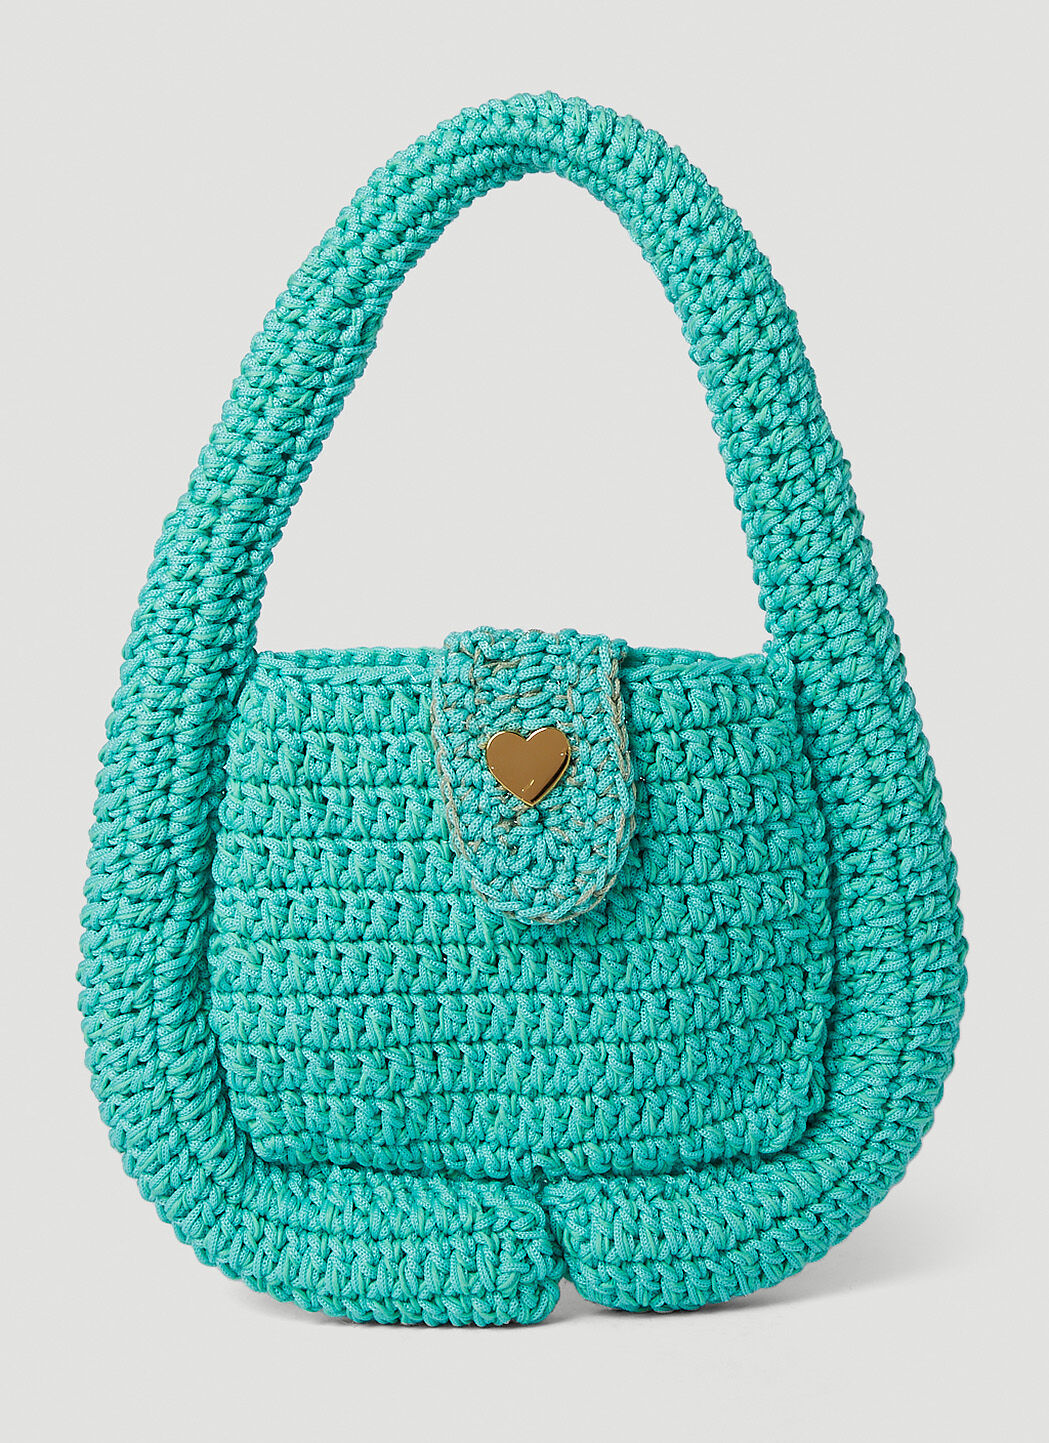 Marco Rambaldi Handmade Crochet Handbag Pink mra0252012